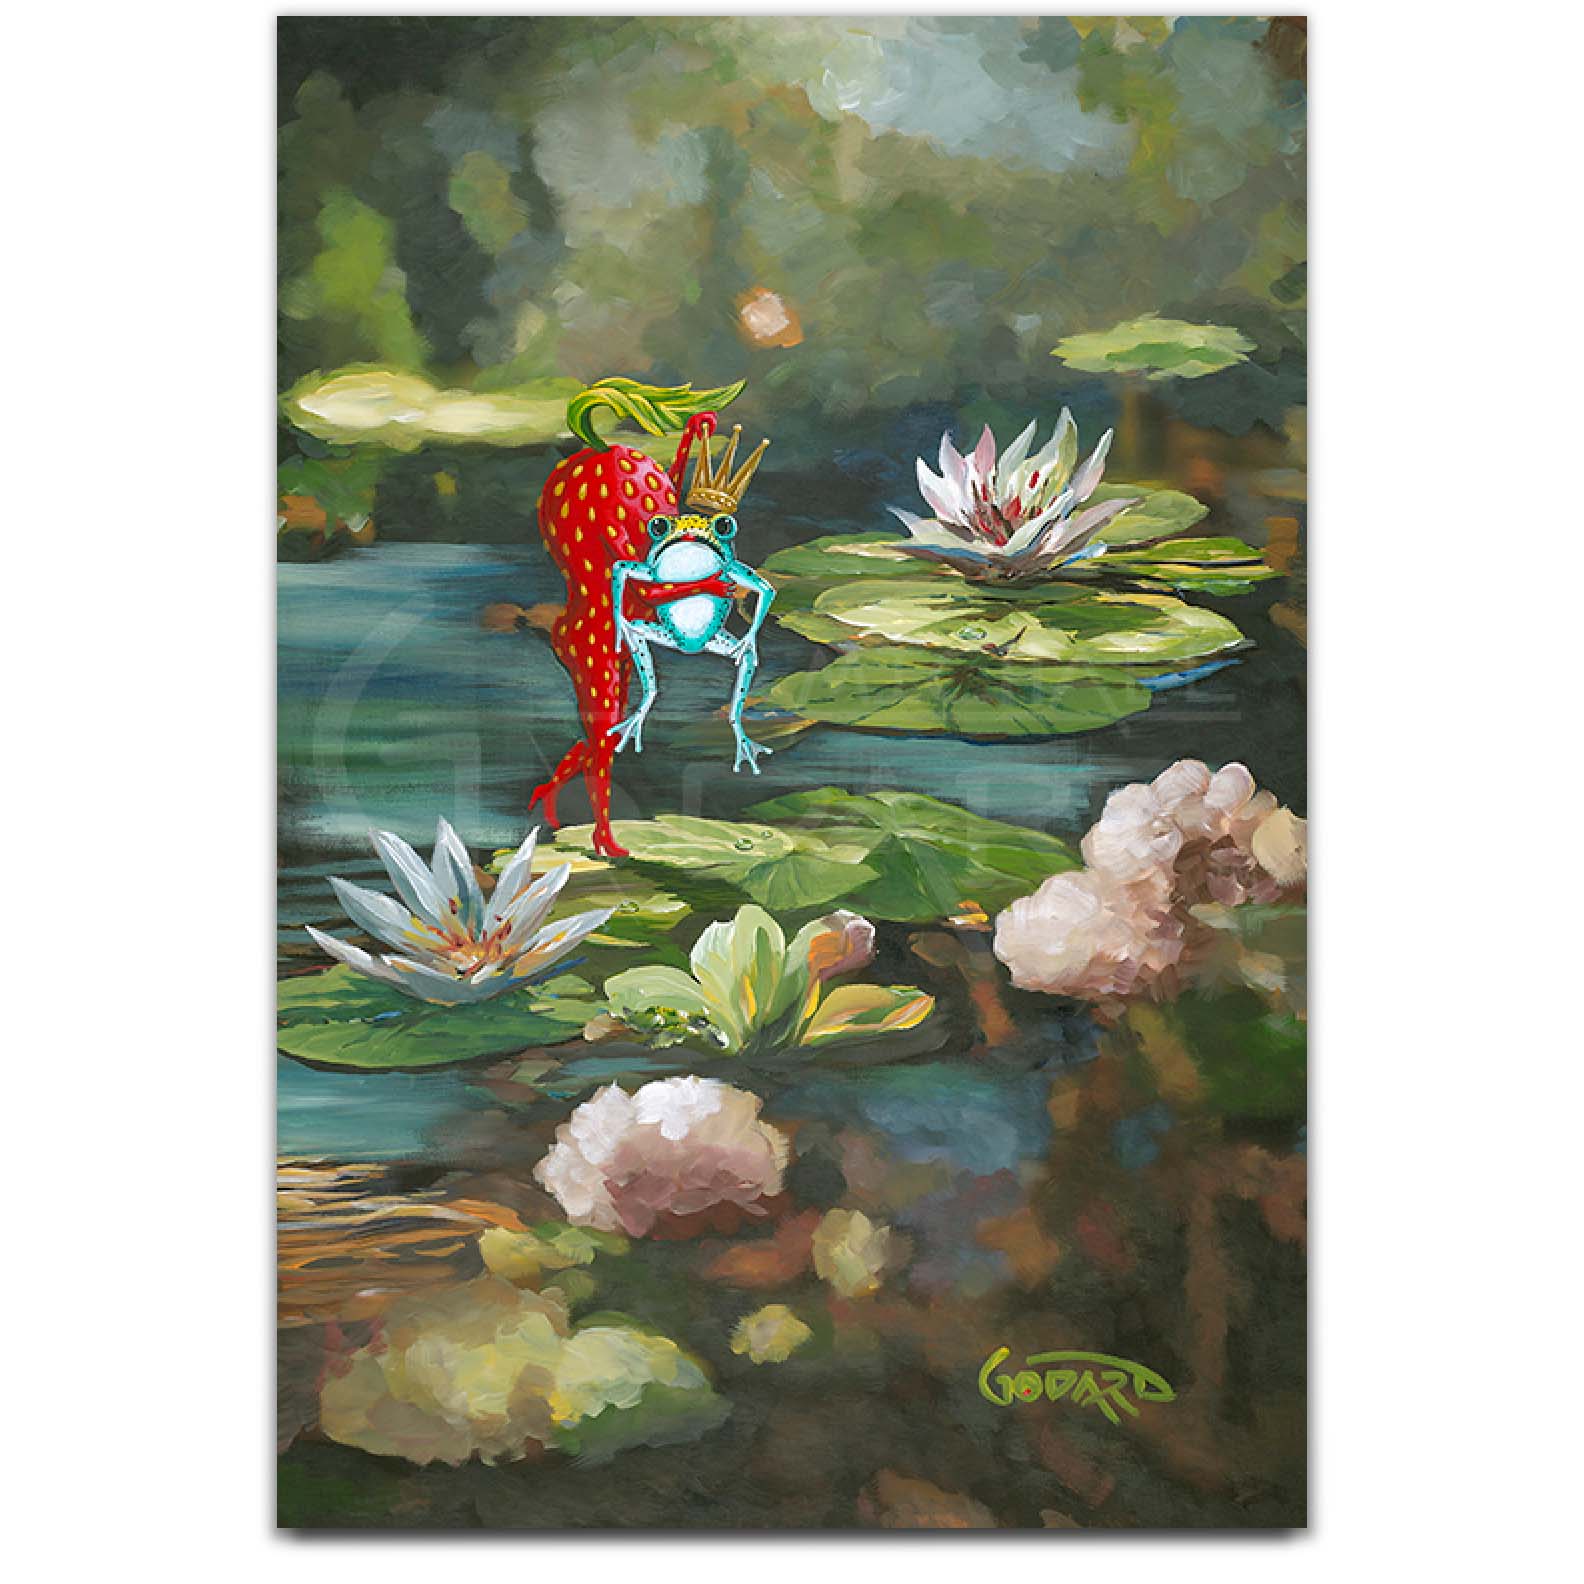 Michael Godard "Frog Triptych: I Found My Prince" Limited Edition Canvas Giclee